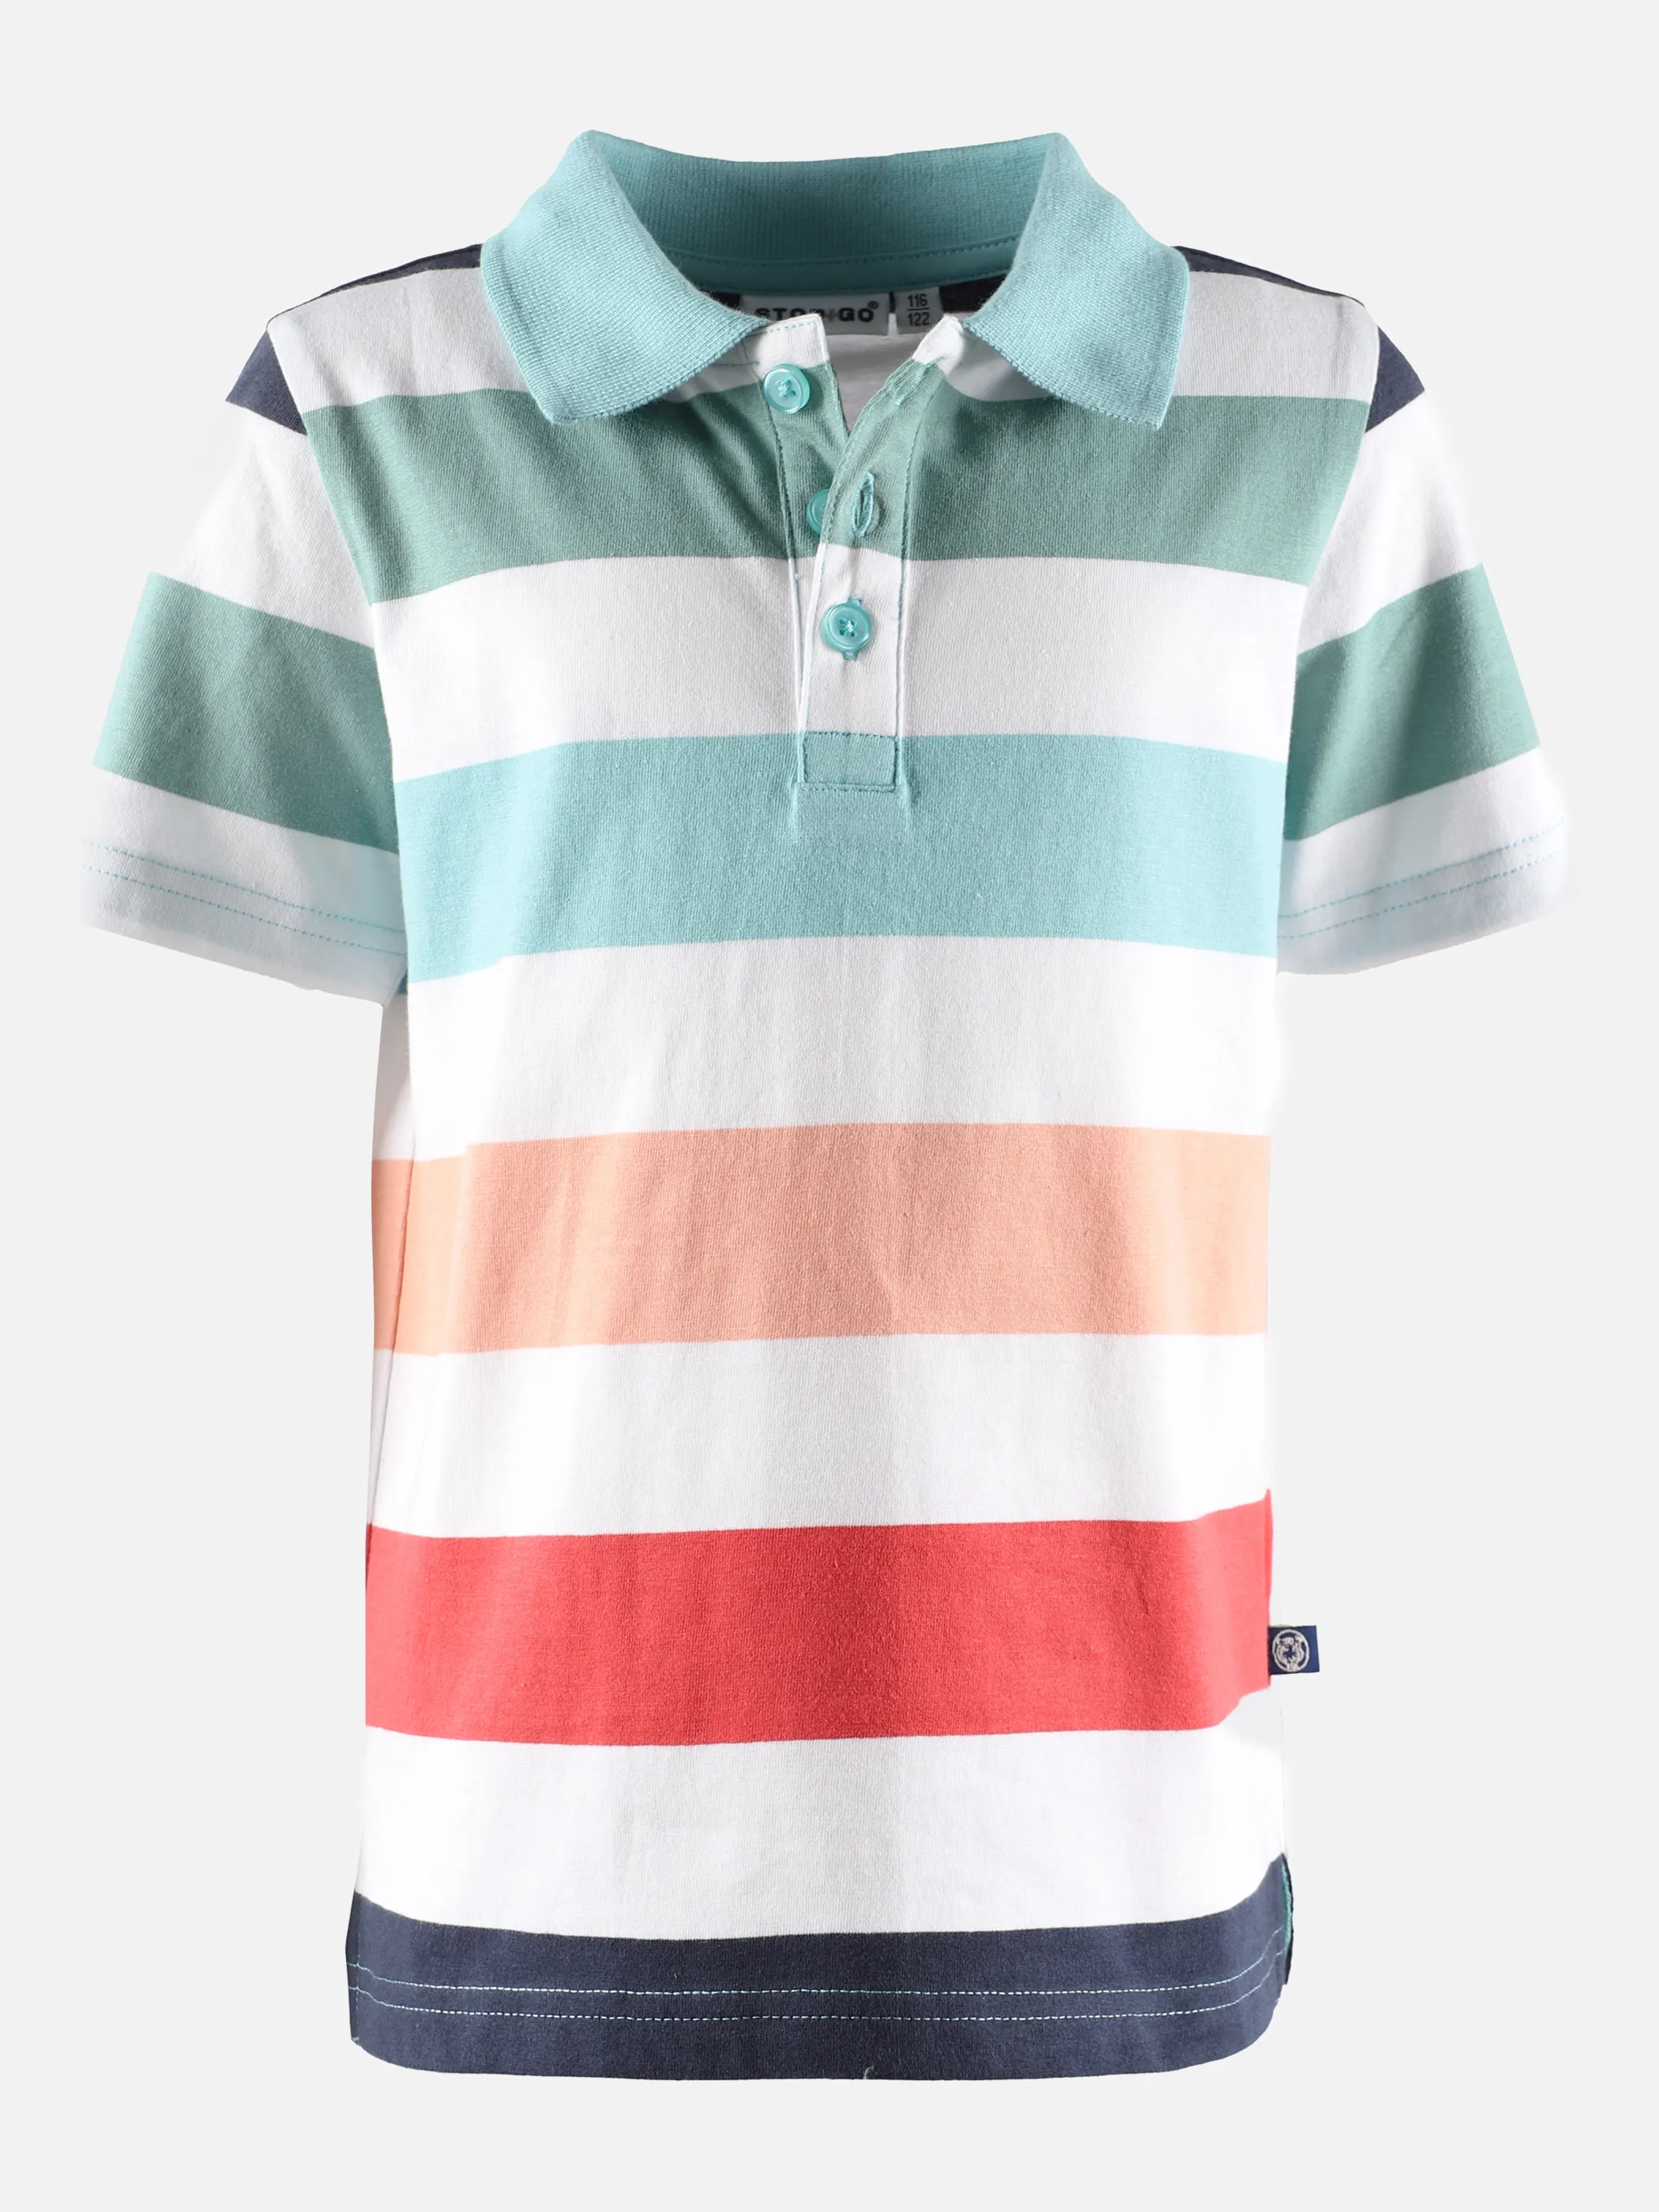 Stop + Go KJ Polo Shirt gestreift in sechs Farben Bunt 875500 MULTICOLOR 1